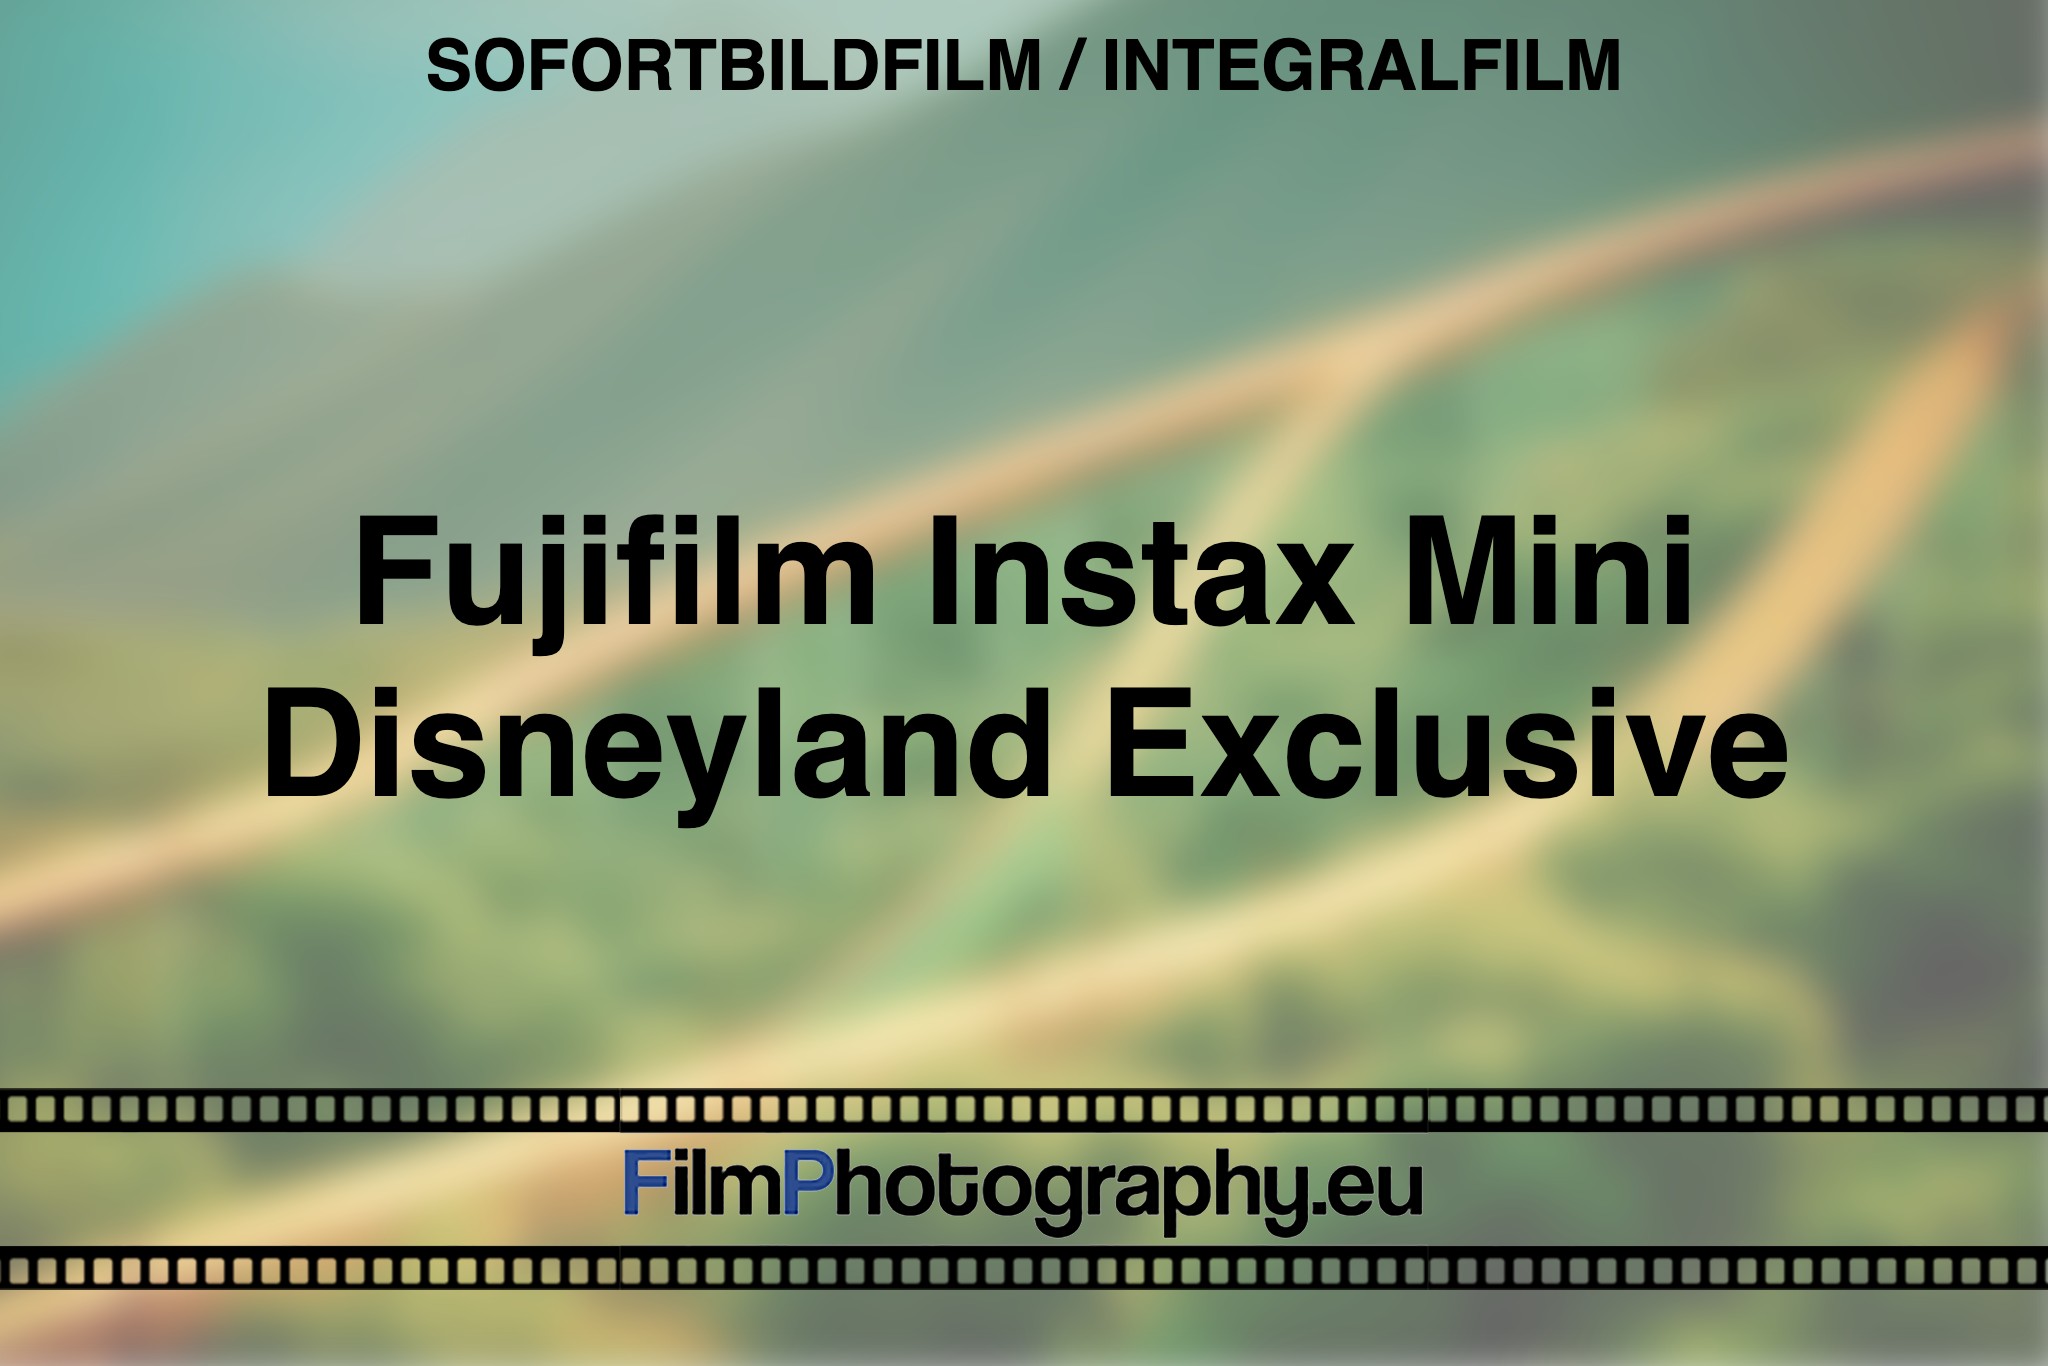 fujifilm-instax-mini-disneyland-exclusive-sofortbildfilm-integralfilm-fp-bnv